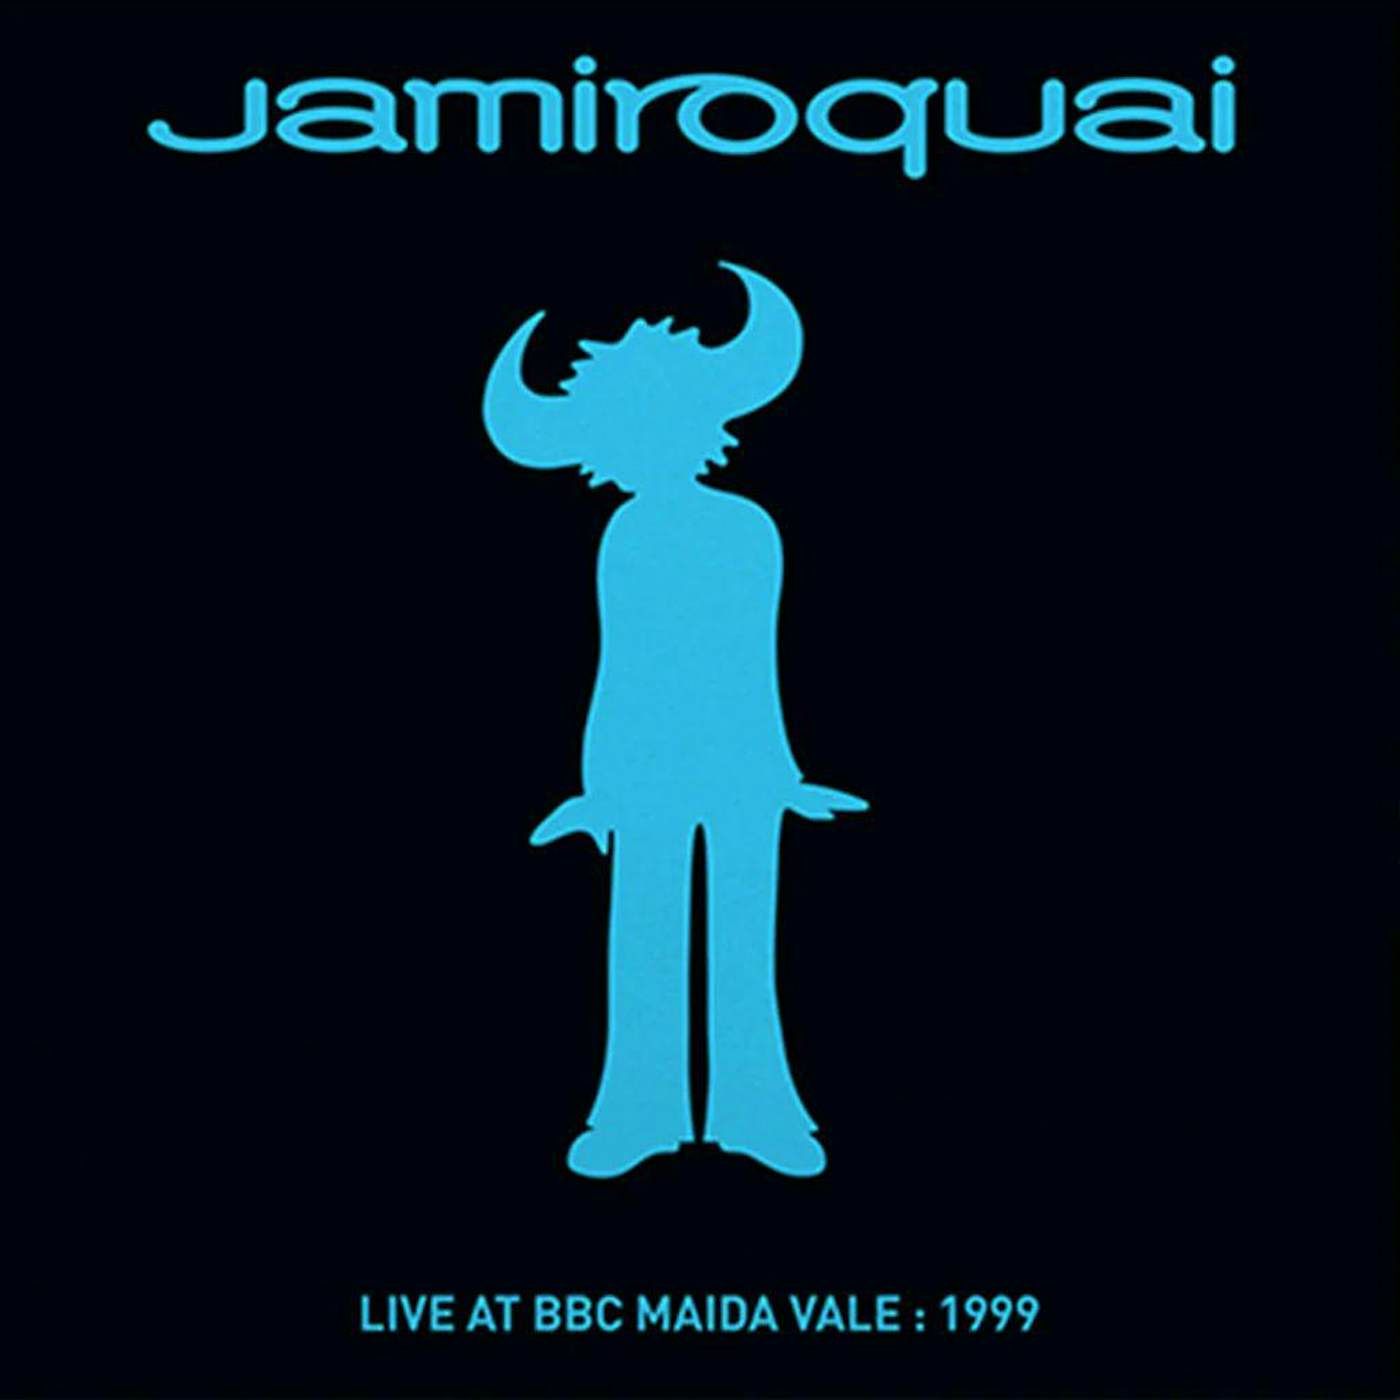 Jamiroquai Live At BBC Maida Vale 1999 Vinyl Record